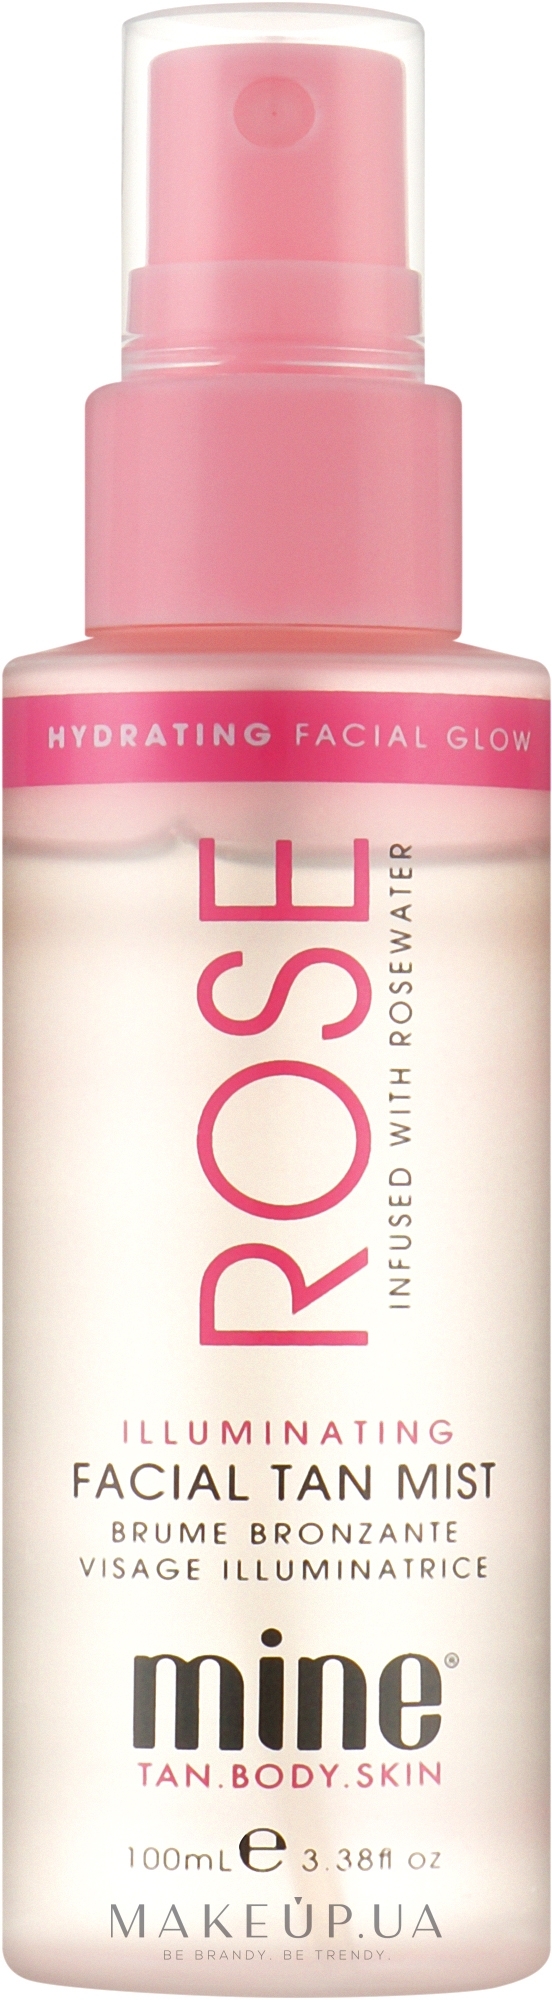 Мус водичка для миттєвої автозасмаги - Minetan Rose Illuminating Facial Tan Mist — фото 100ml